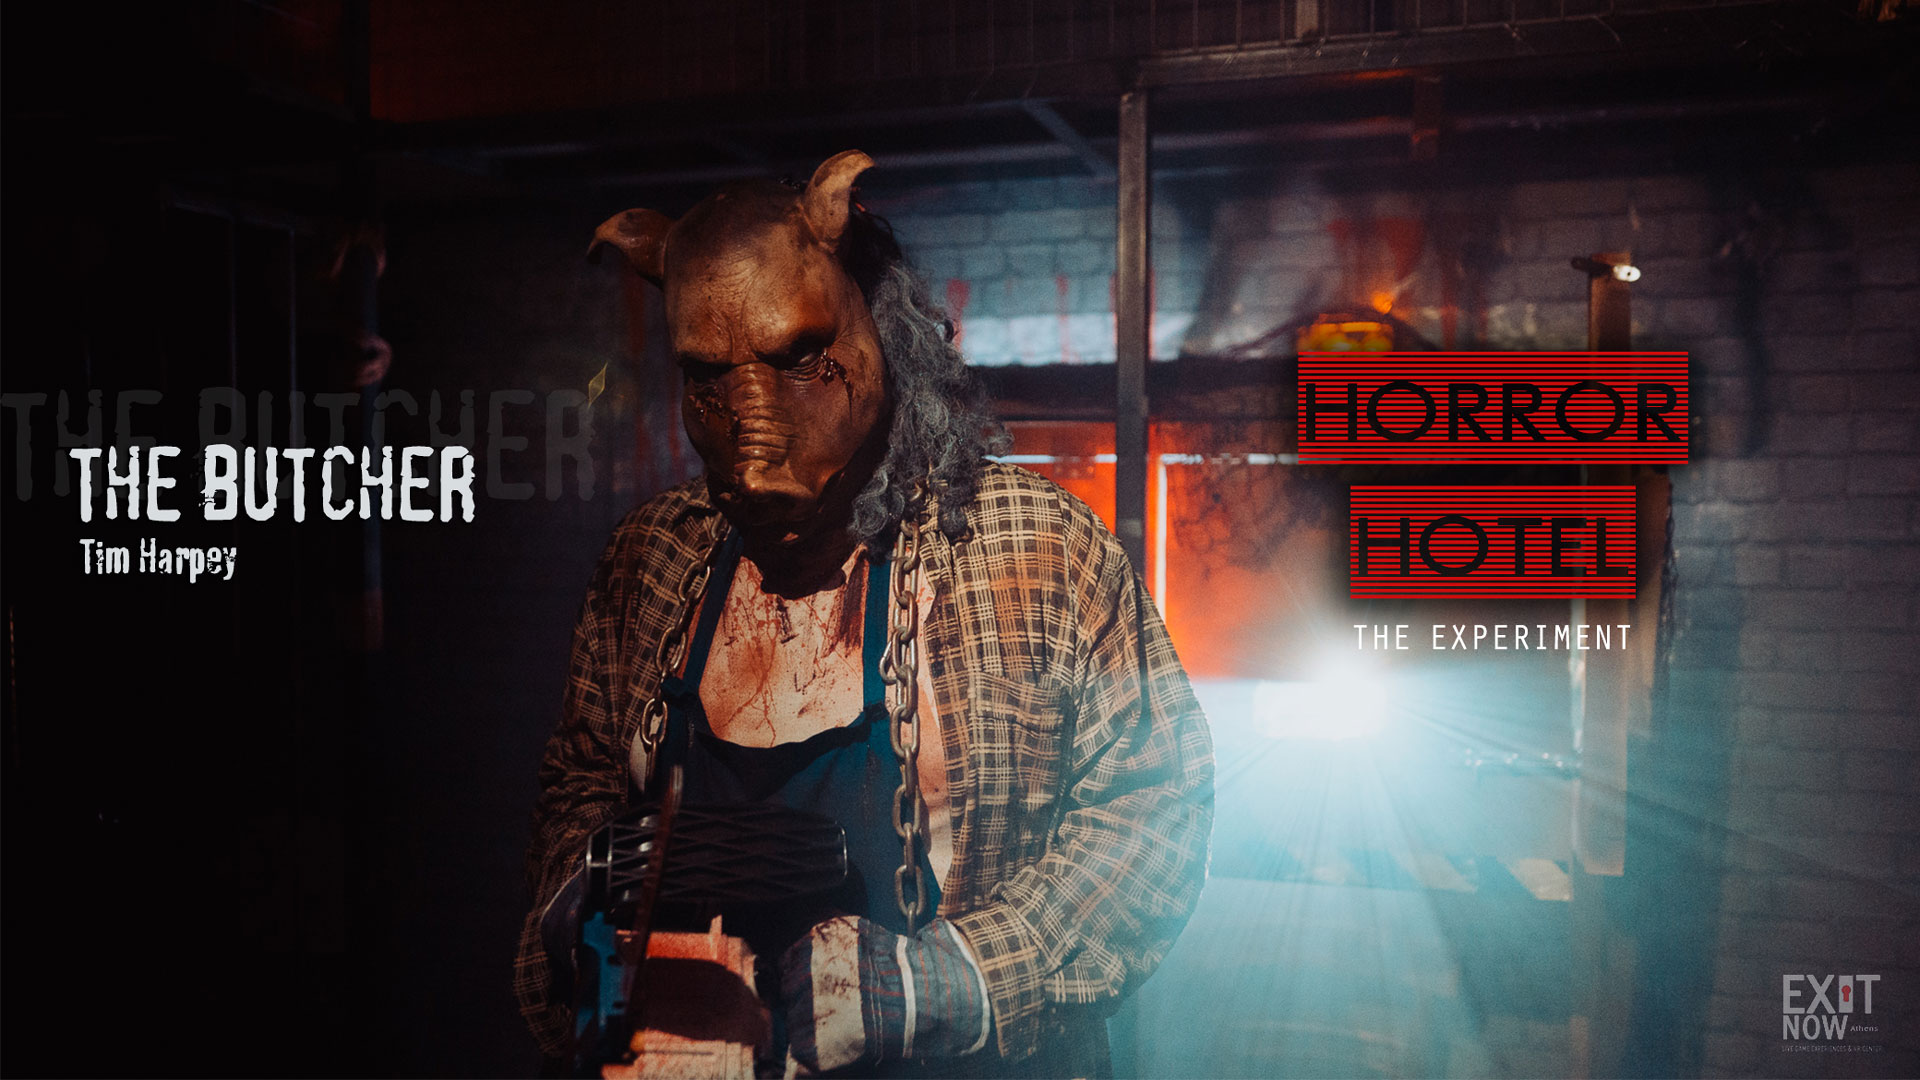 The Butcher | HORROR HOTEL